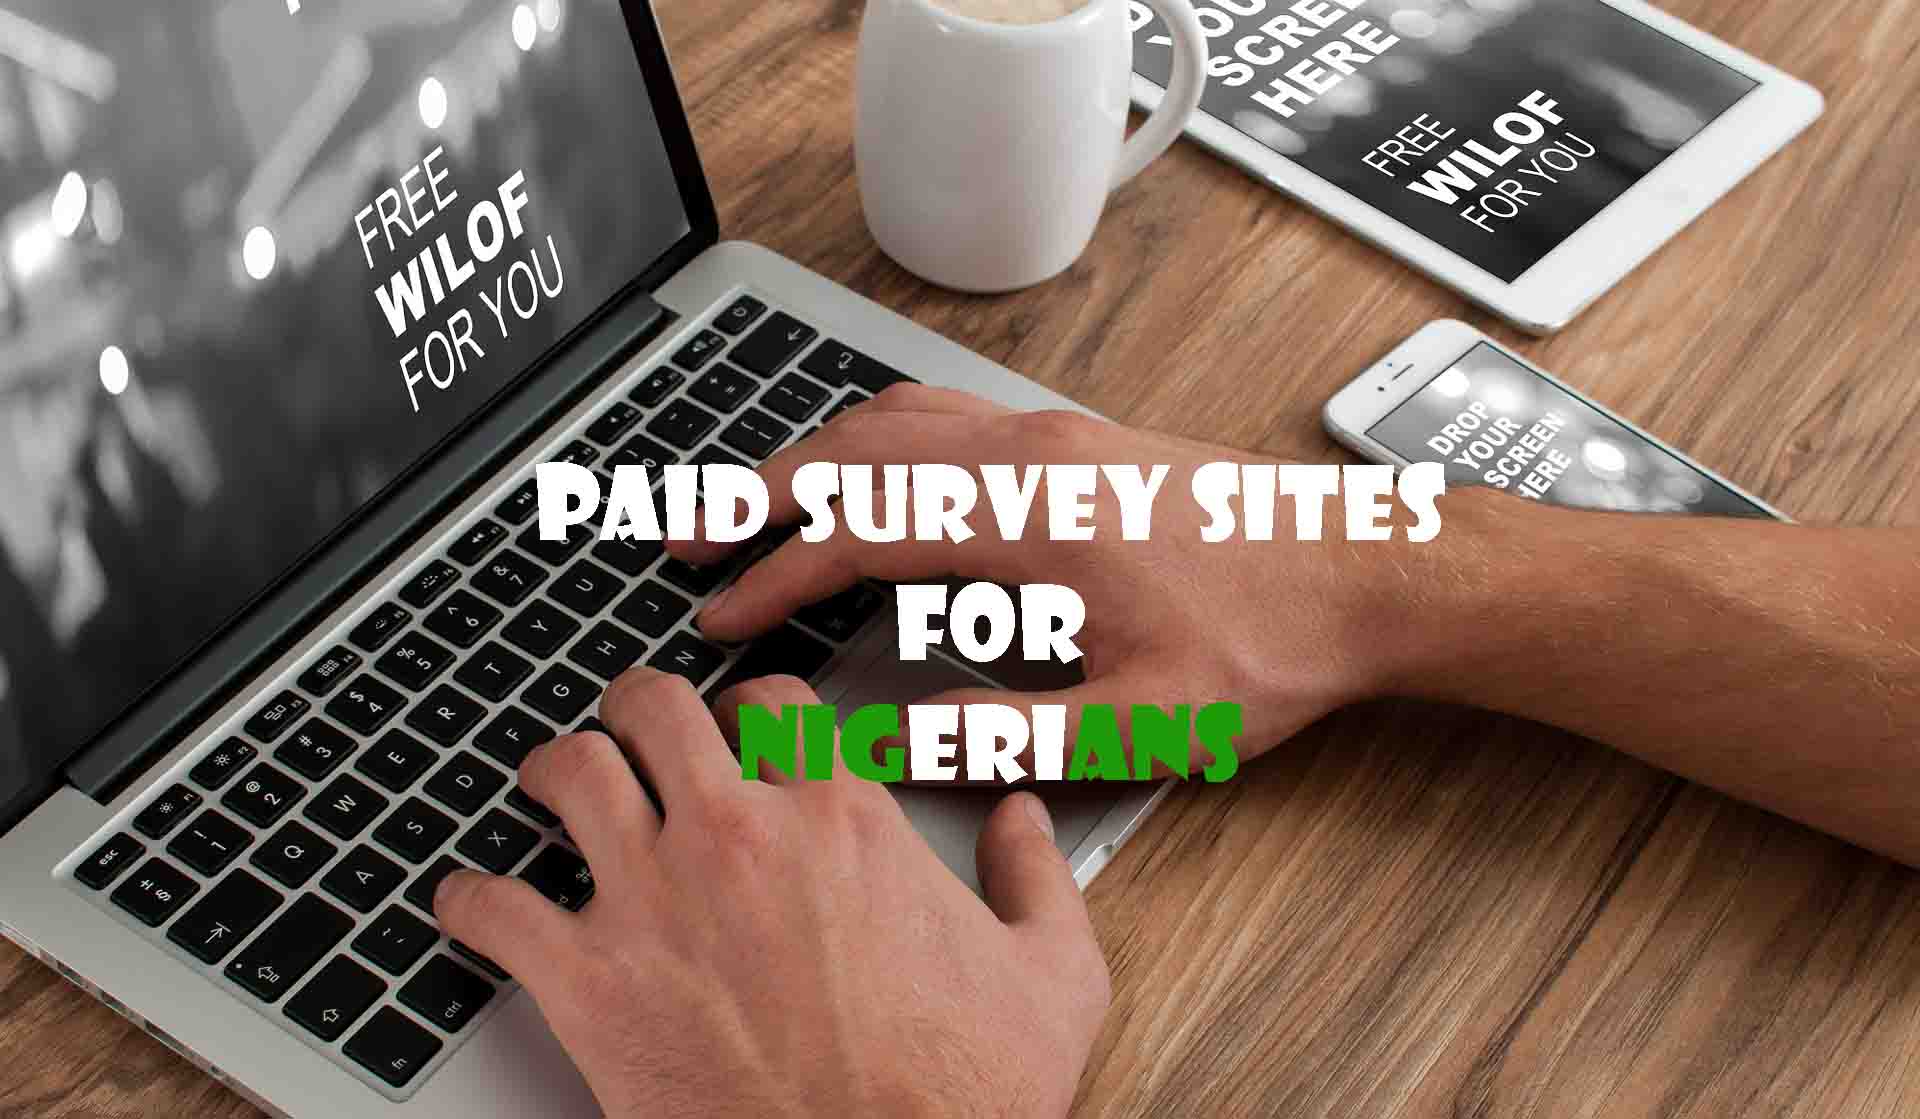 Paid survey sites for Nigerians